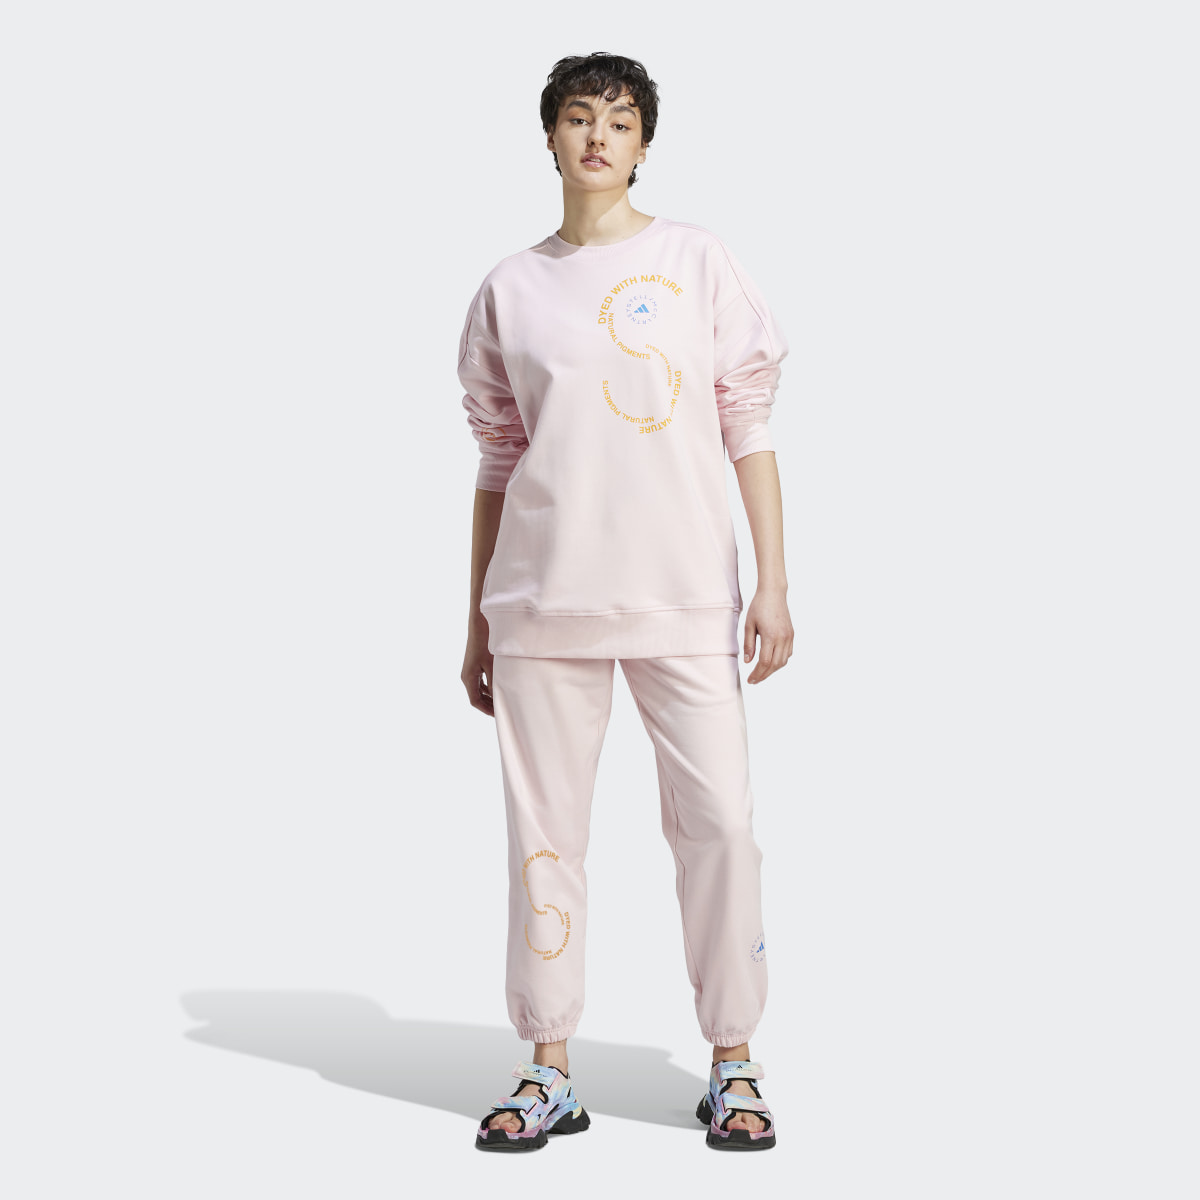 Adidas by Stella McCartney Sportswear Sweatshirt (Gender Neutral). 4